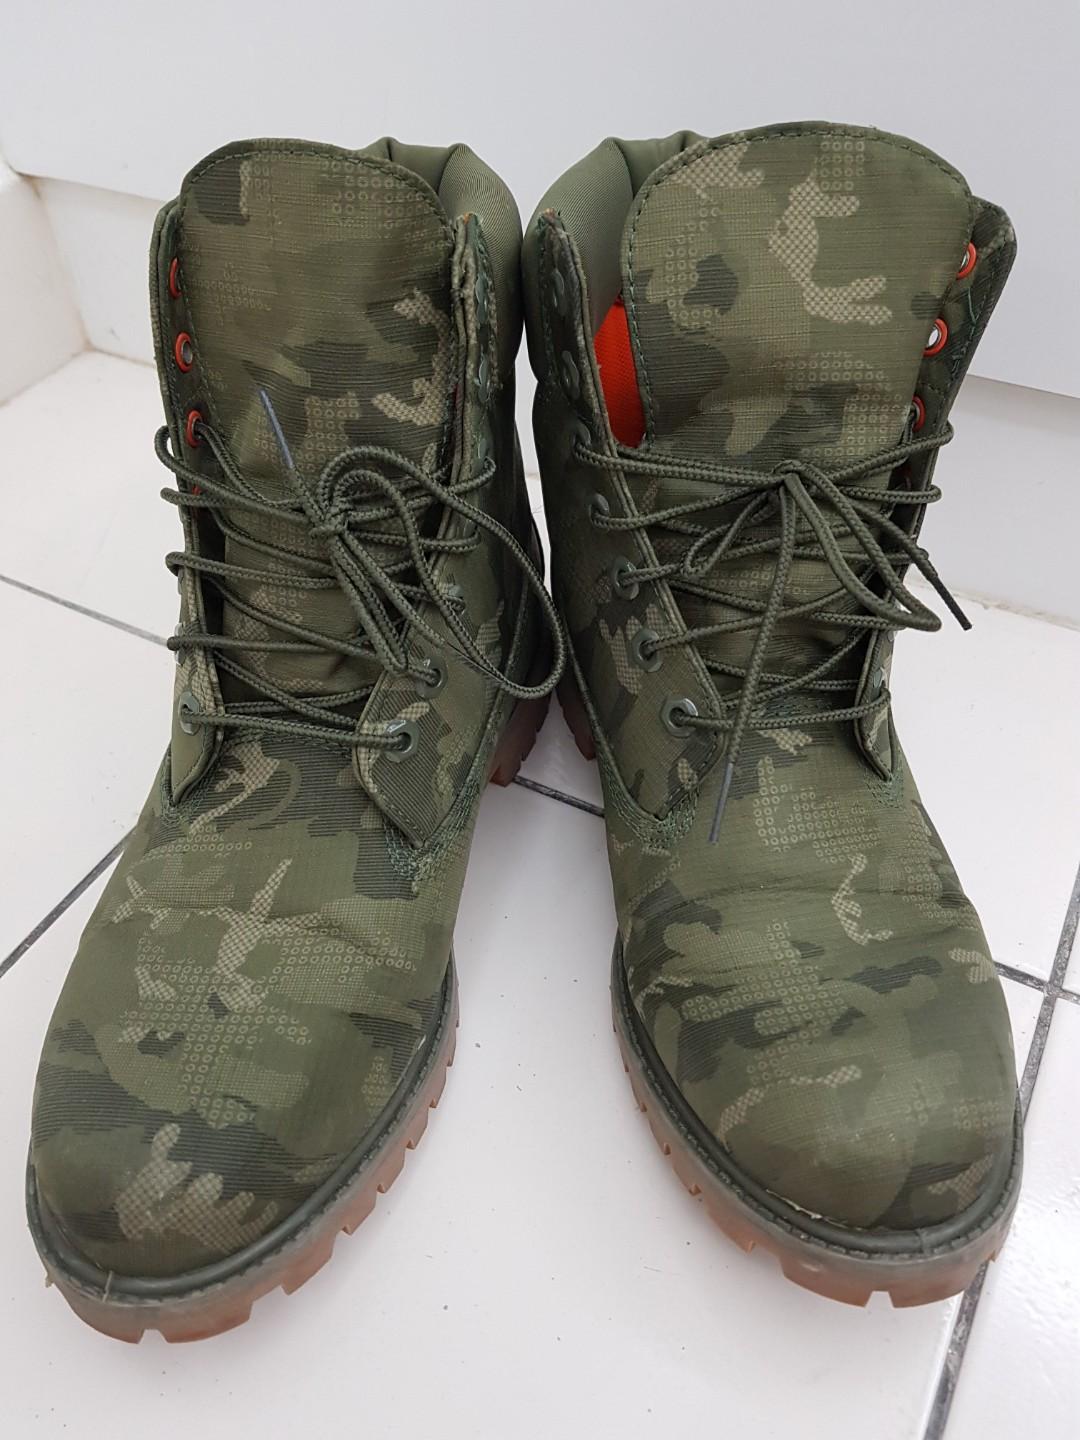 Waterproof Clarks Desert Boots with Sno-Seal – Ian Broad